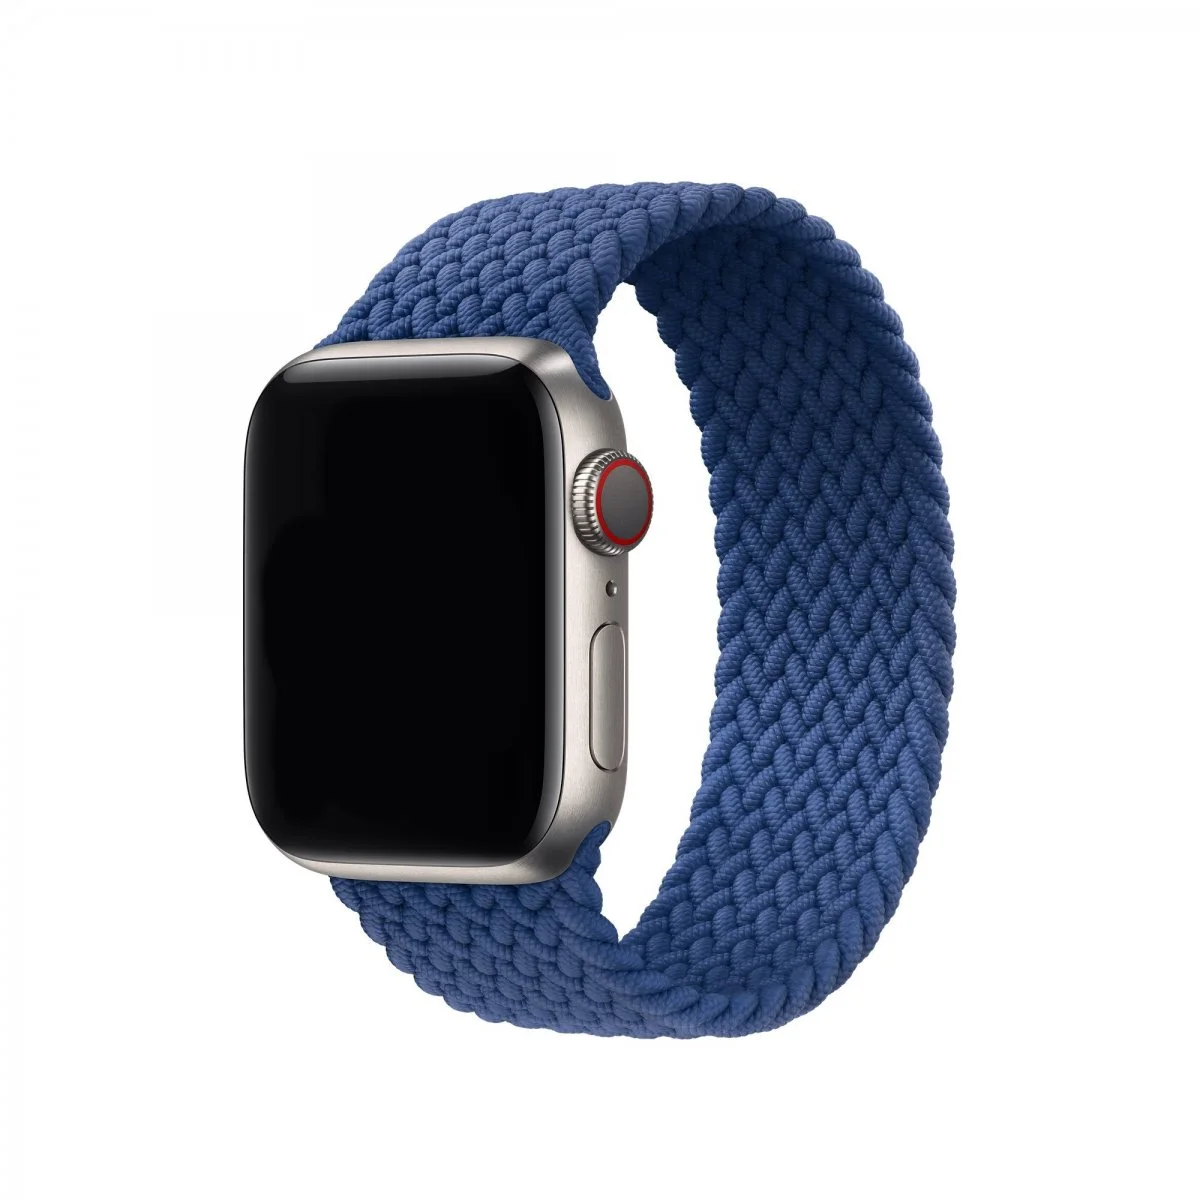 Řemínek iMore Braided Solo Loop Apple Watch Series 1/2/3 42mm - atlanticky modrý (M)